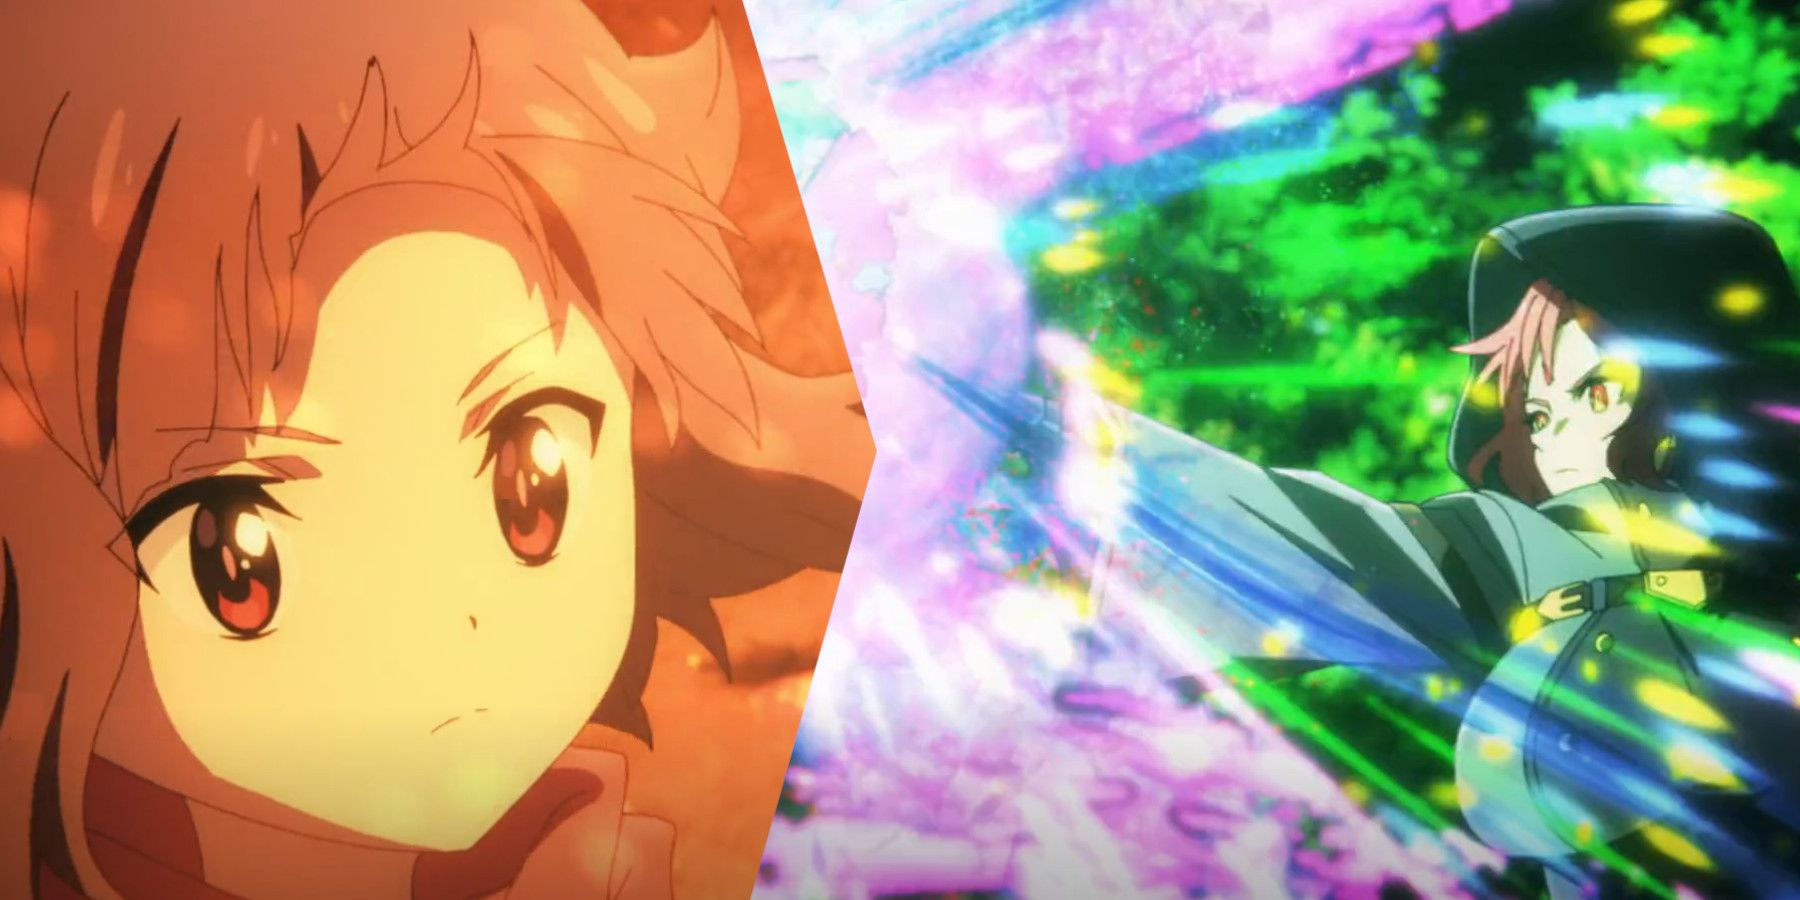 KONOSUBA spin-off,An Explosion on This Wonderful World! ANIME TRAILER